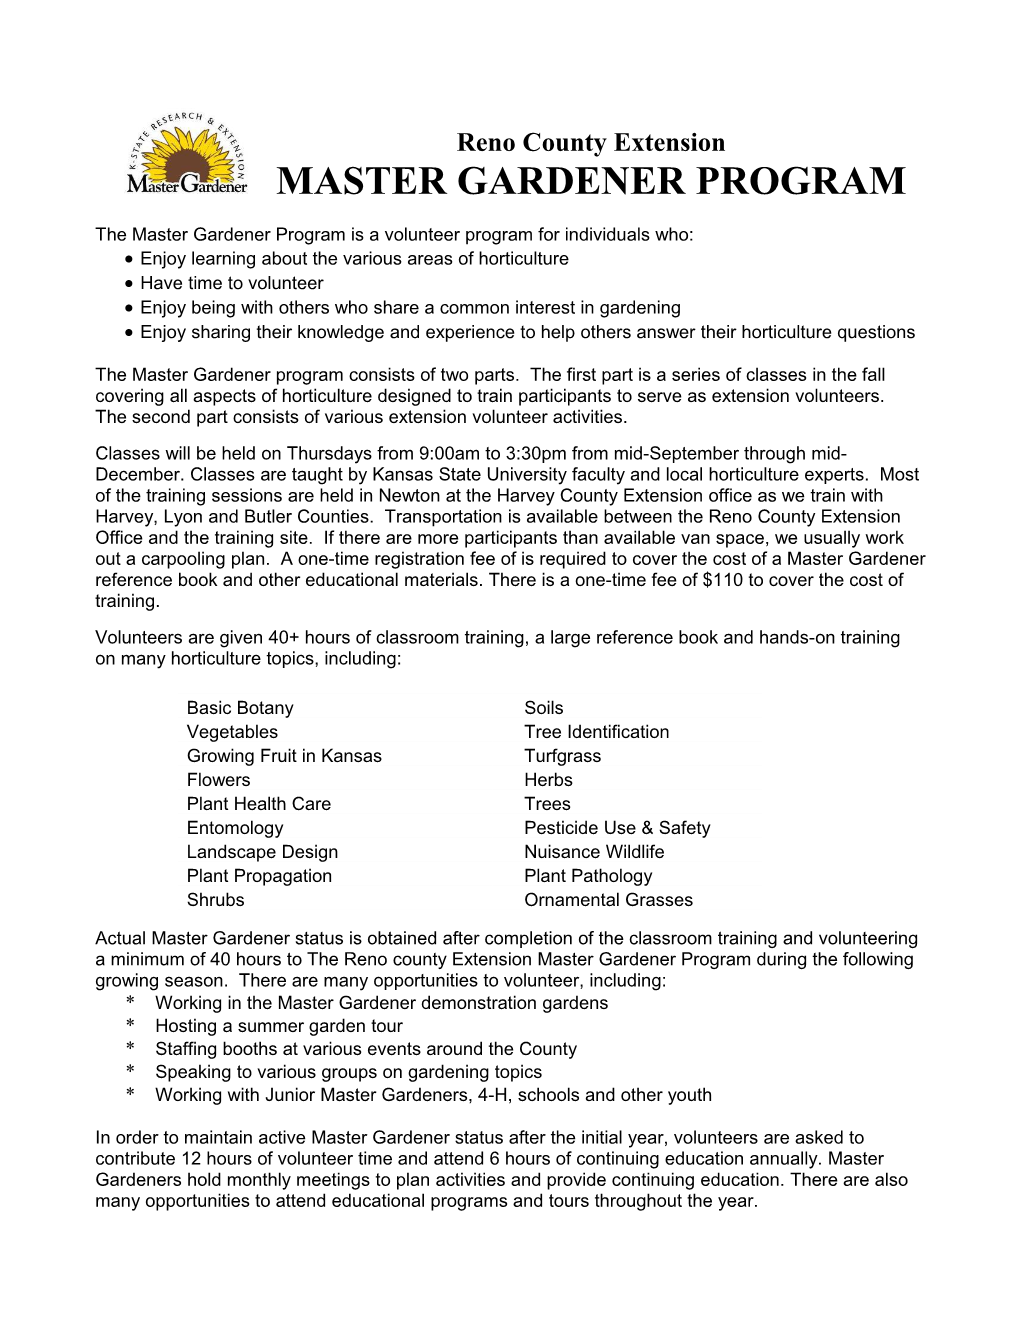 Extension Master Gardener Program